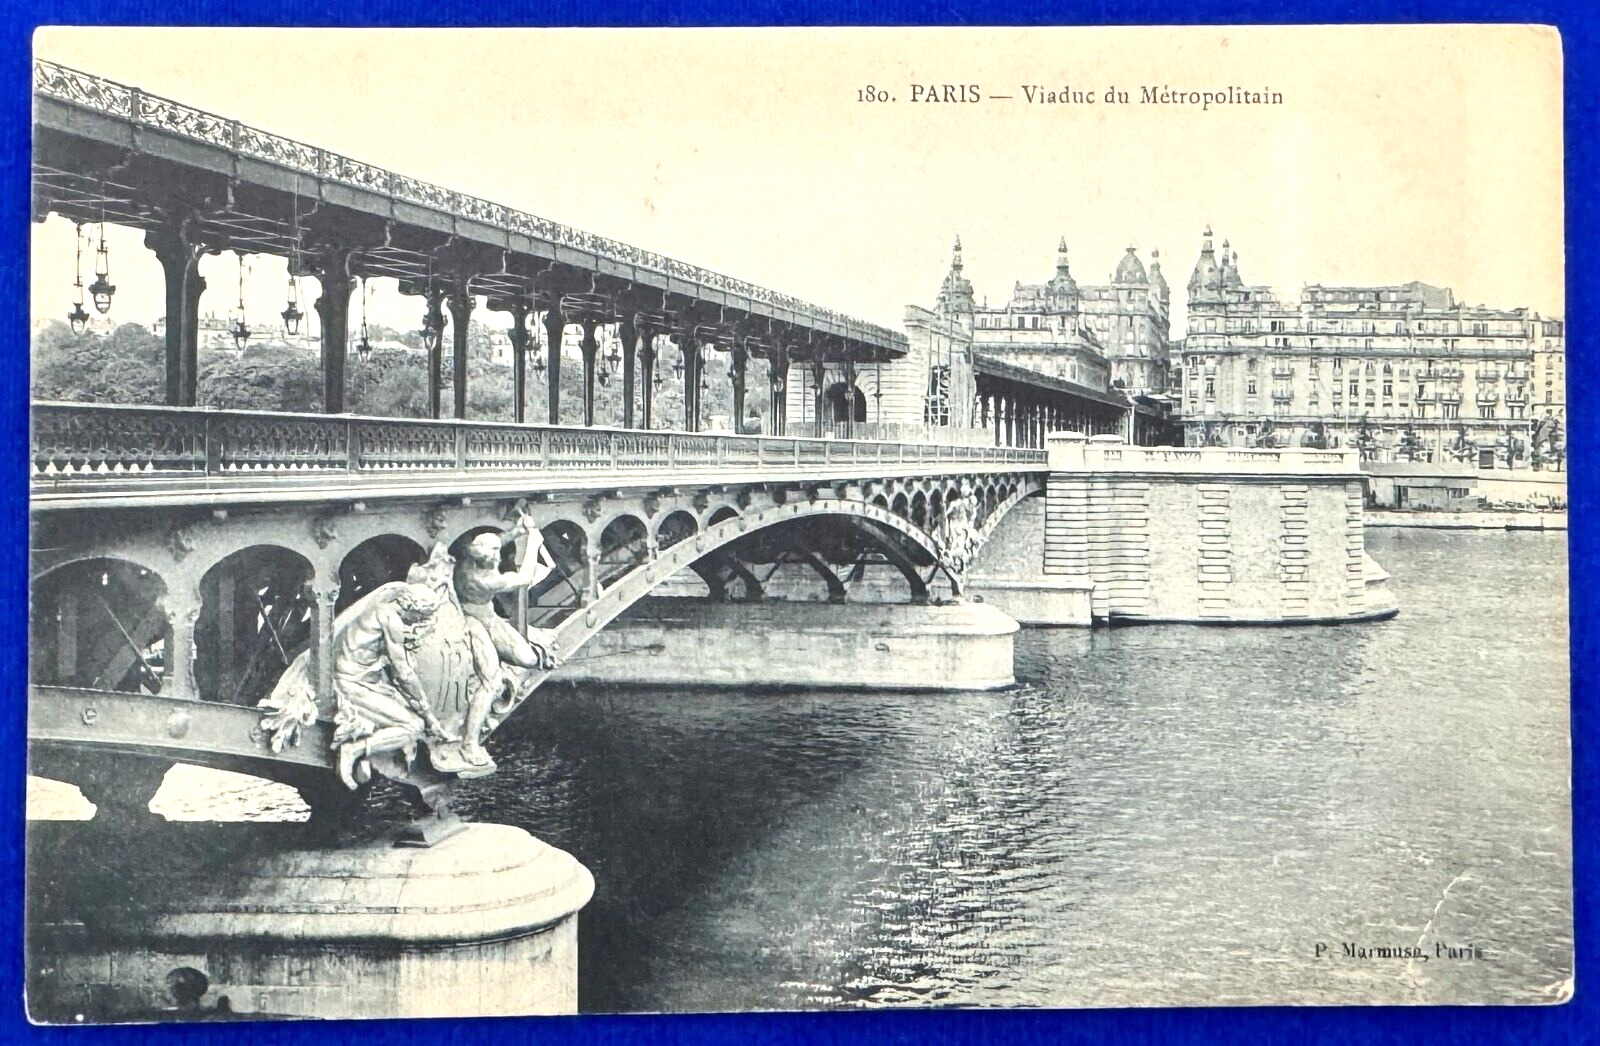 Antique 1918 B&W Metropolitan Viaduct Paris France Postcard World War I WWI